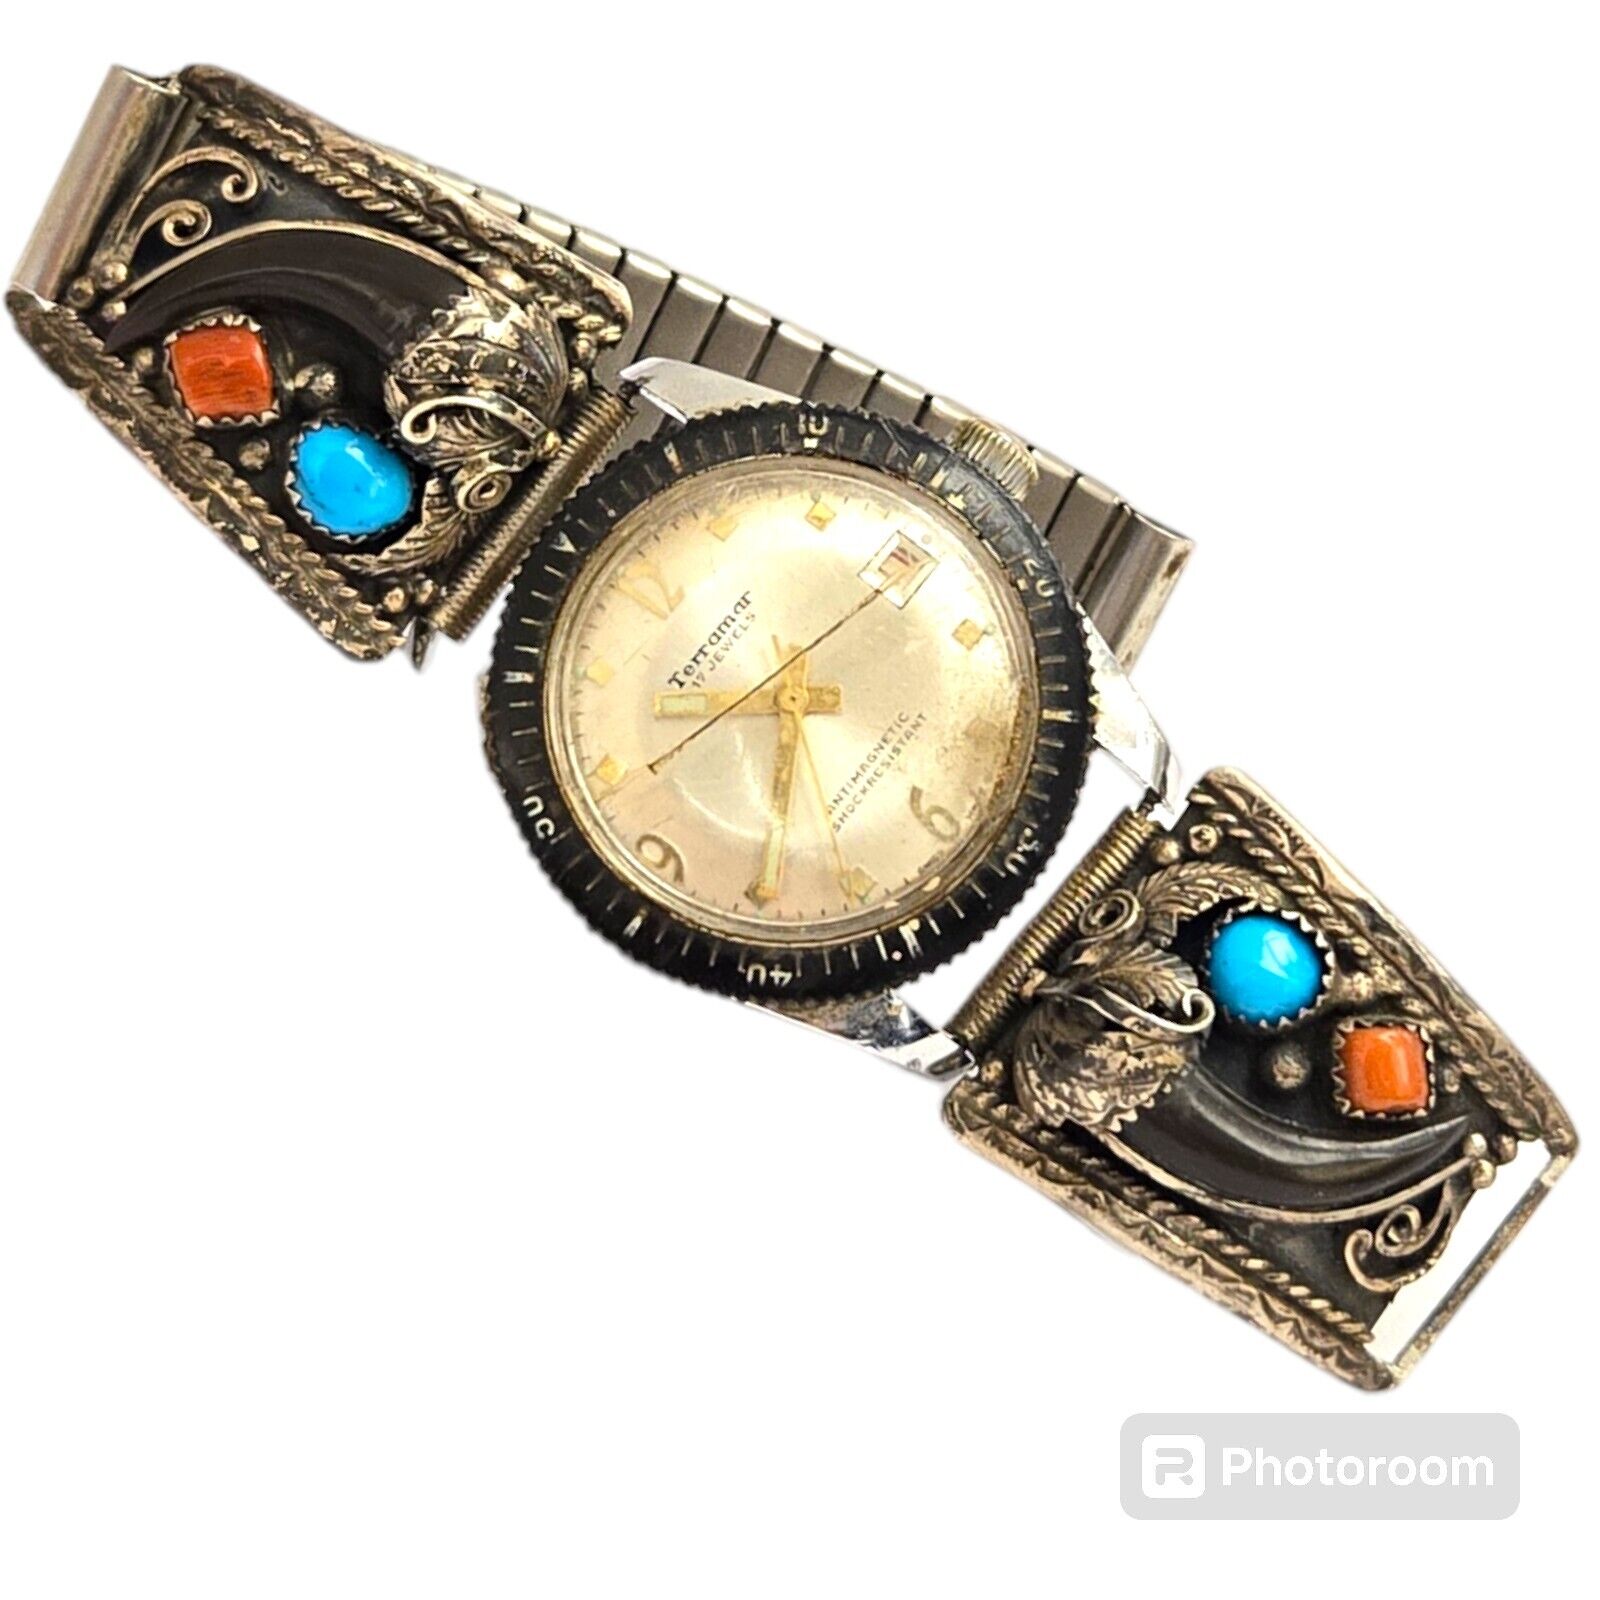 Superb Vintage David Sandoval Navajo Sterling Silver Turquoise & Coral Watch